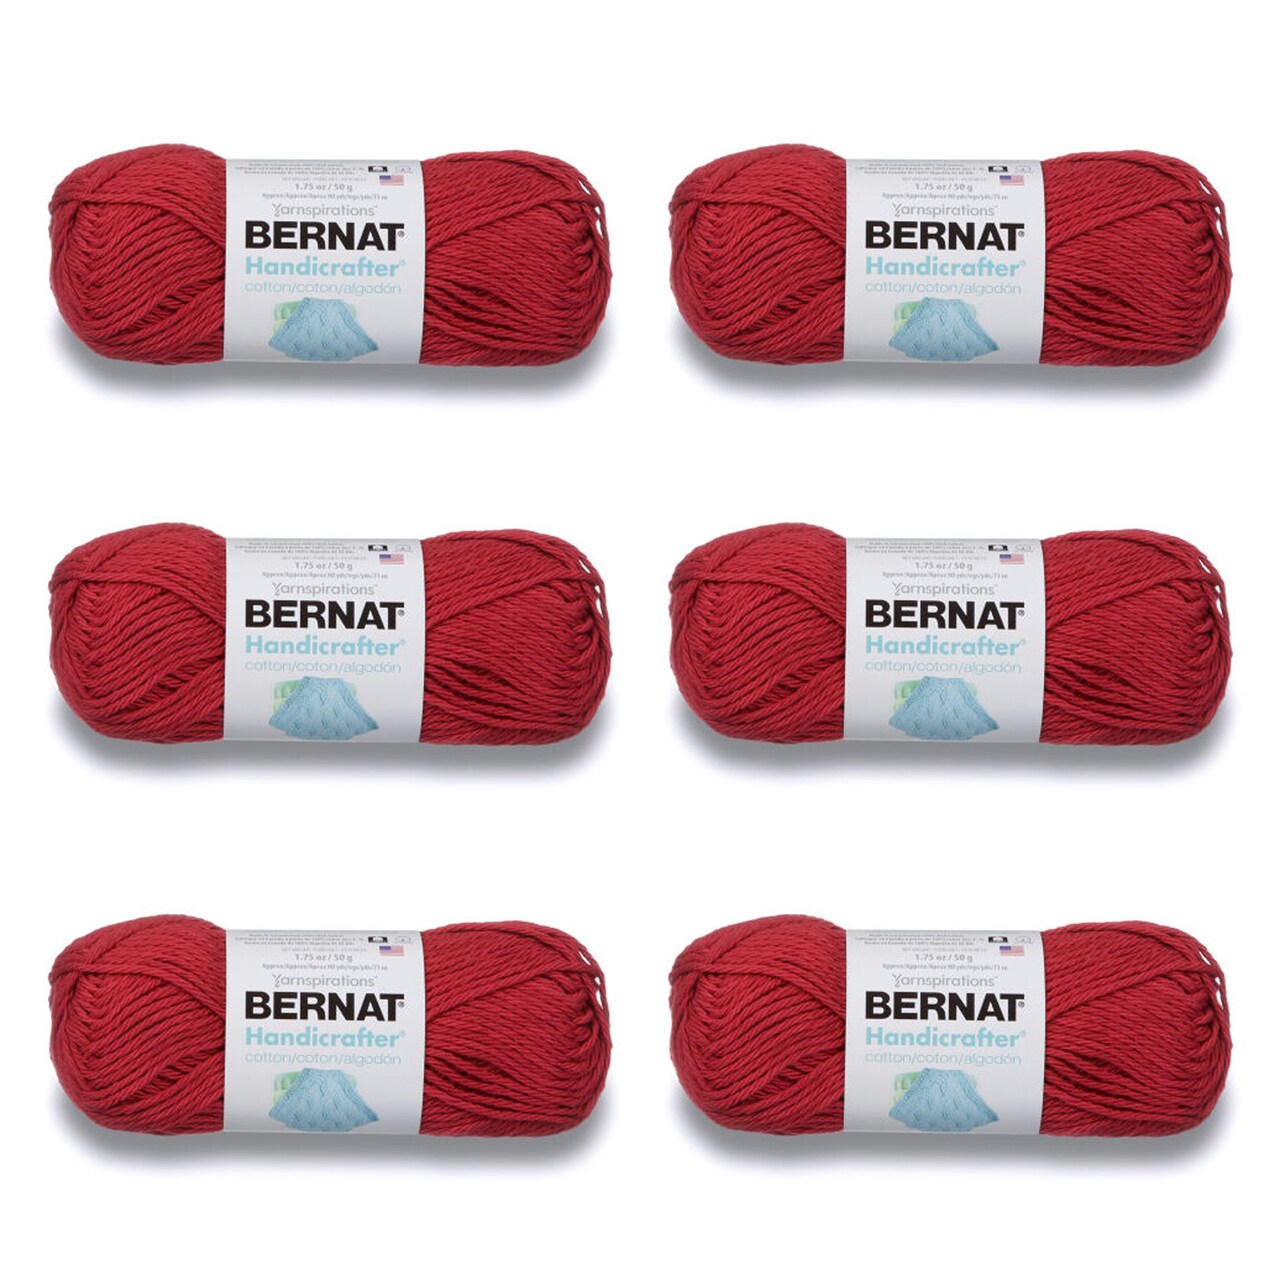 Bernat Handicrafter Cotton Country Red Yarn - 6 Pack of 50g/1.75oz - Cotton  - 4 Medium (Worsted) - 80 Yards - Knitting/Crochet